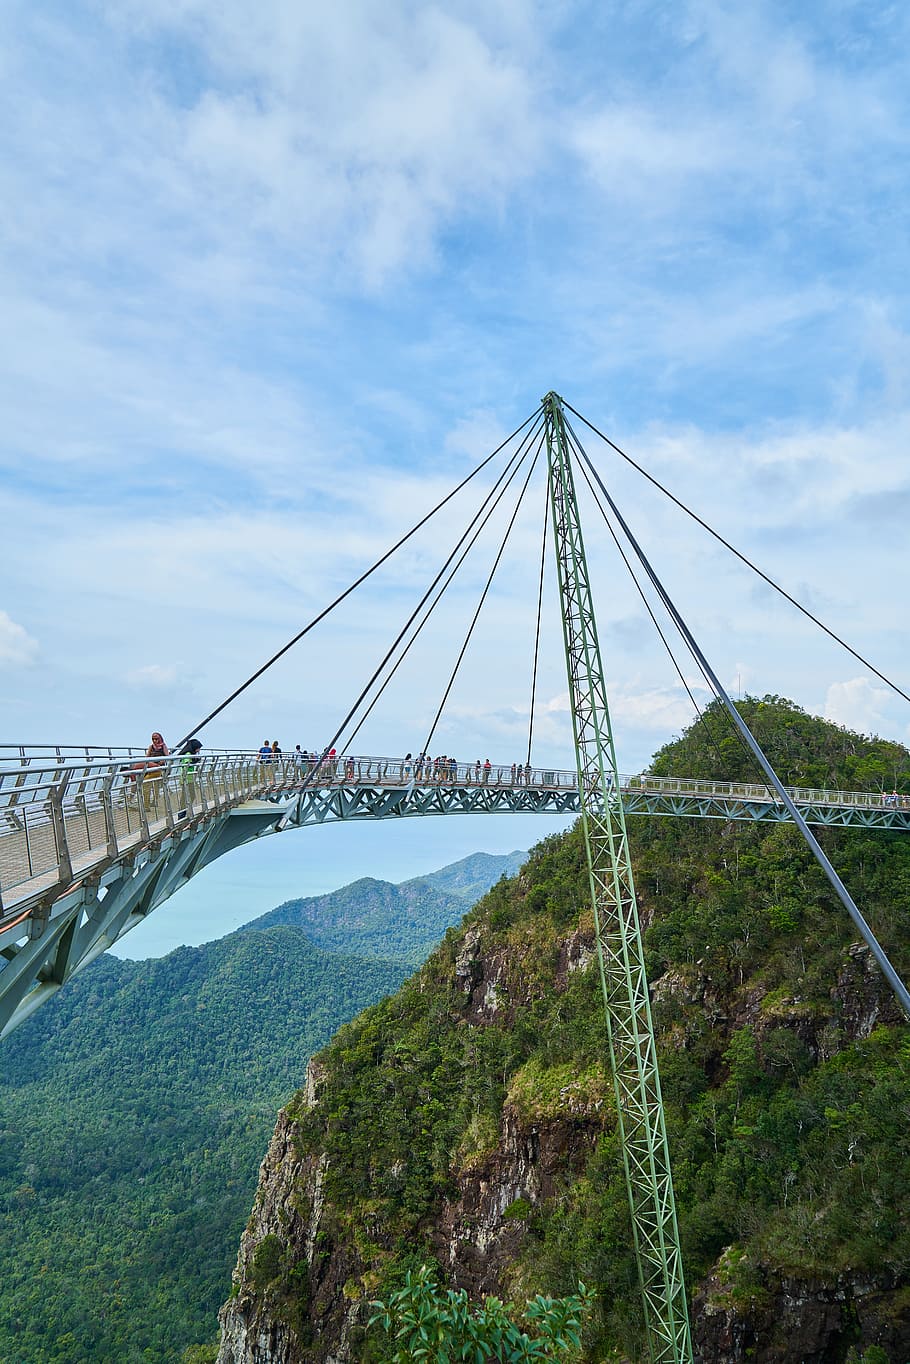 malaysia, bridge, ada, nature, high, travel, asian, architecture, contemporary, rope